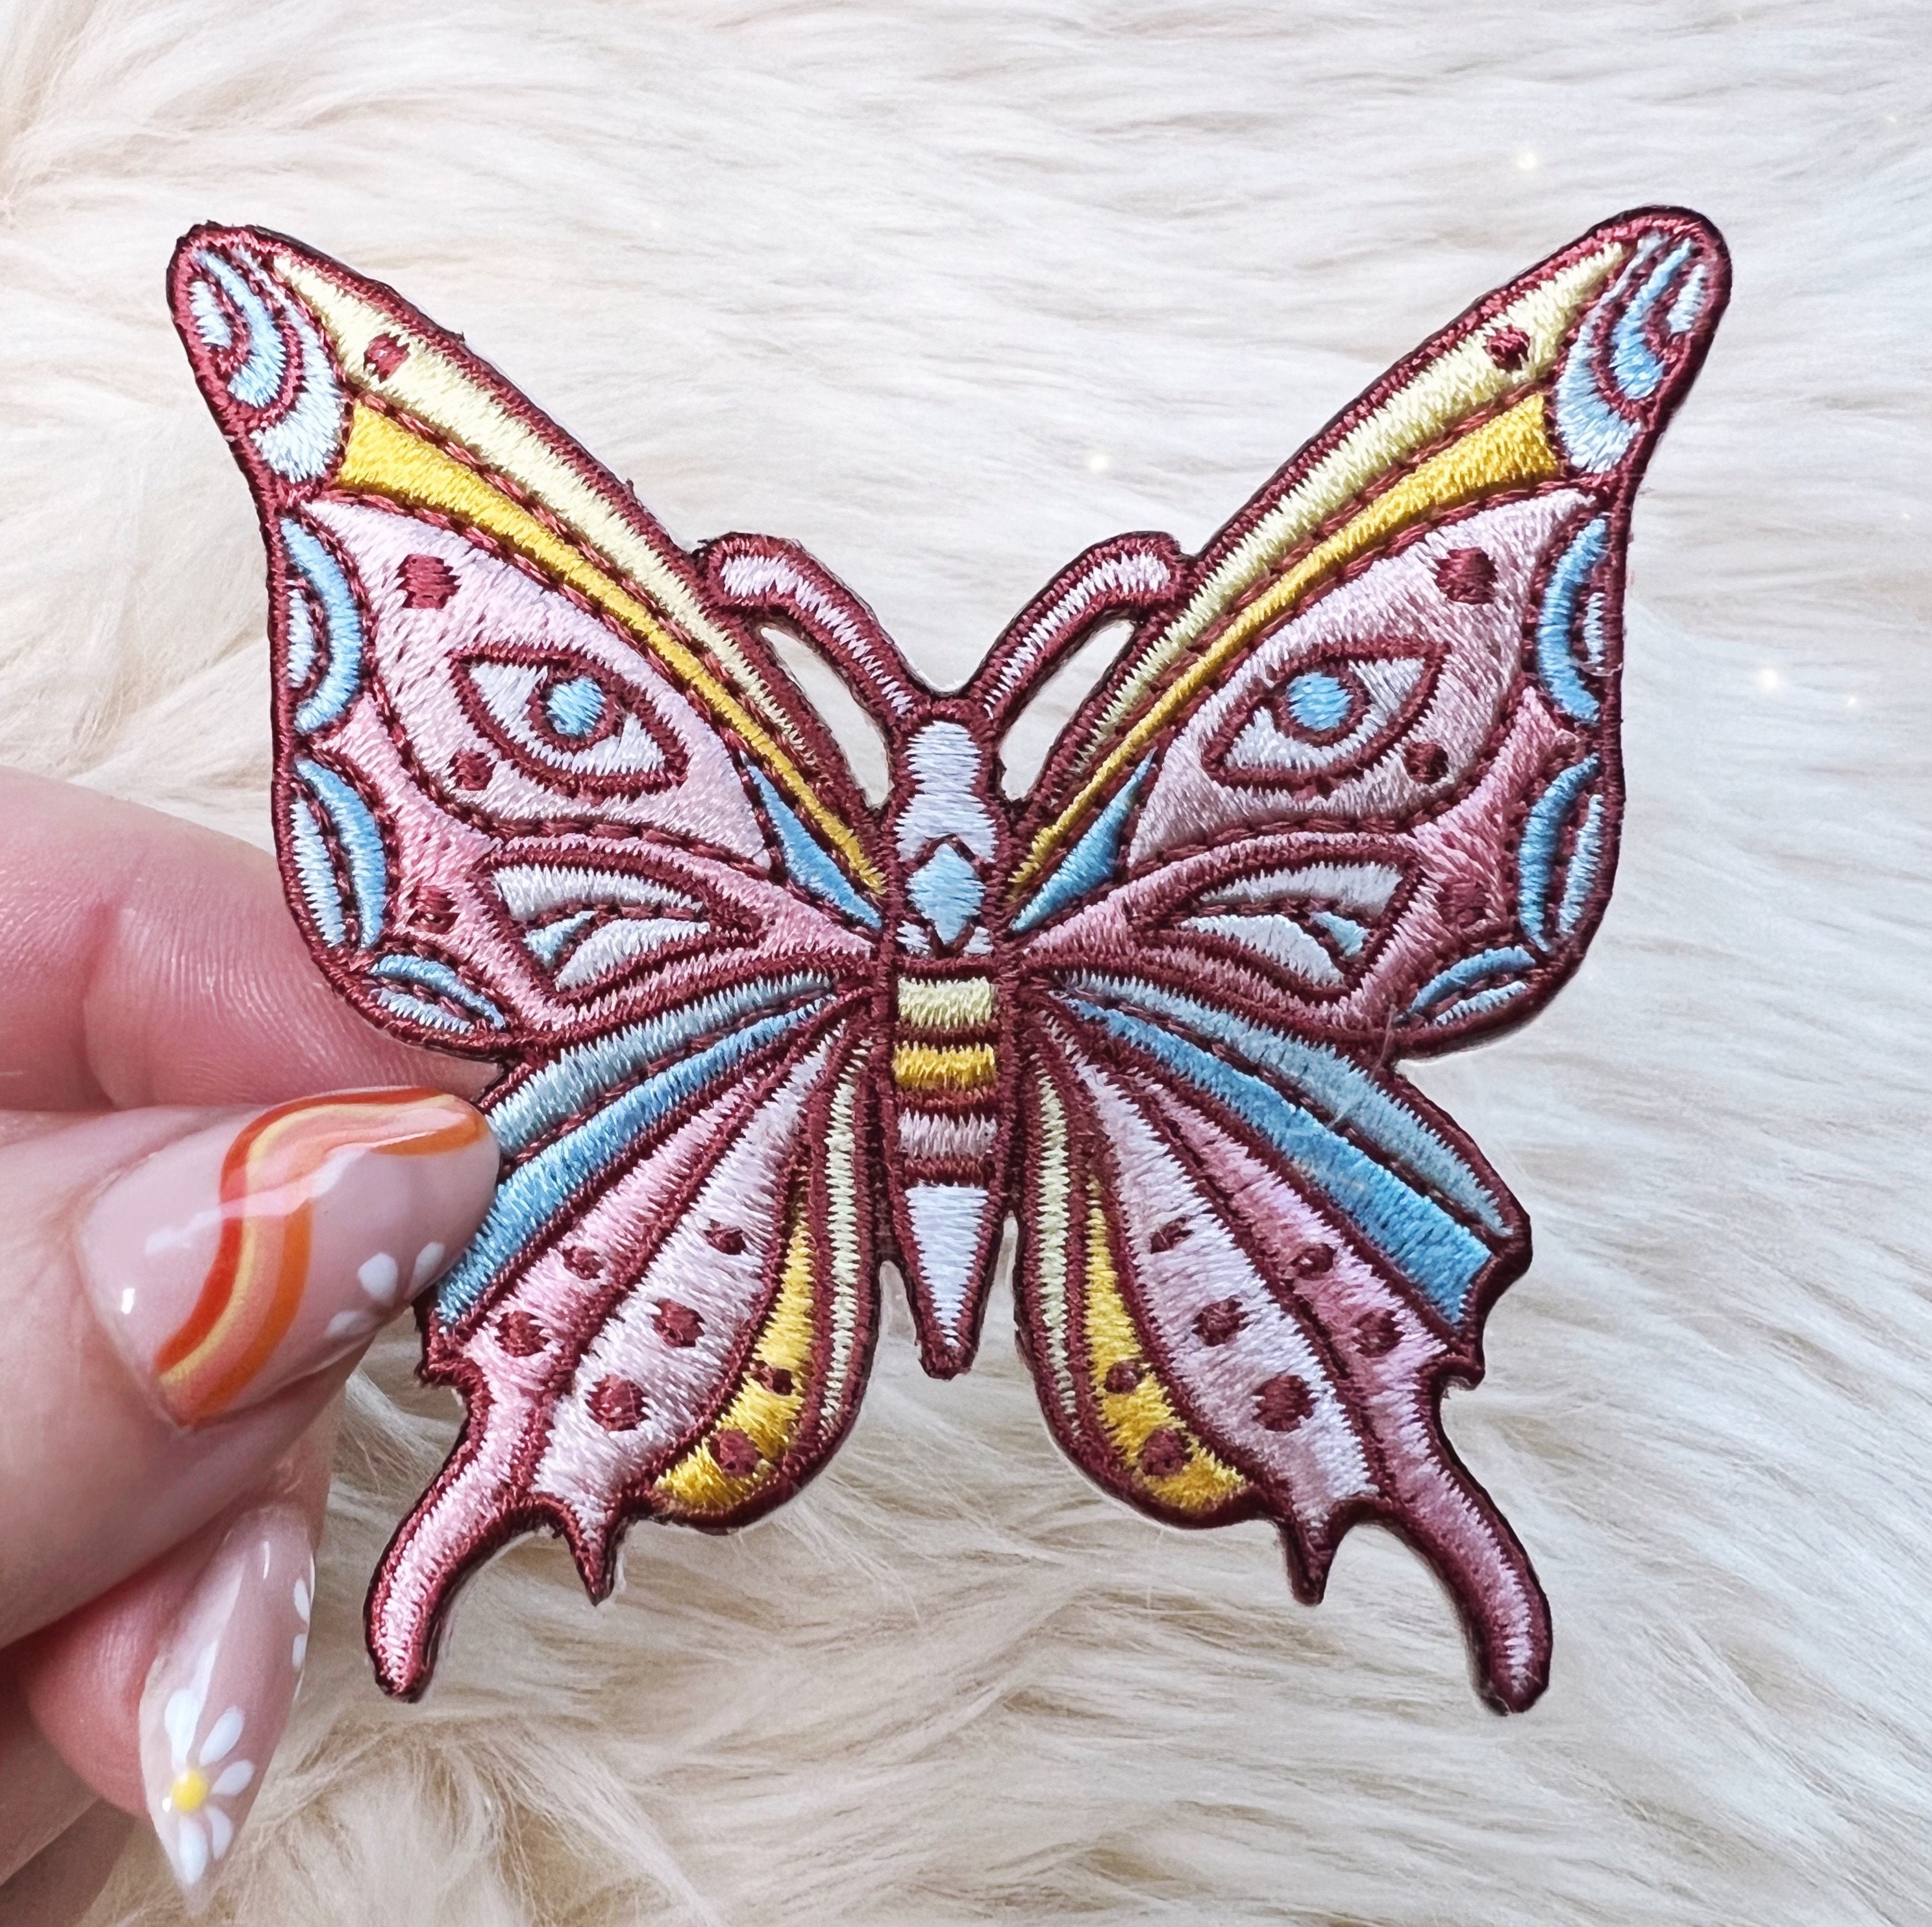 Crystal Sticker Holographic Pastel Aura Crystals & Pink Lotus